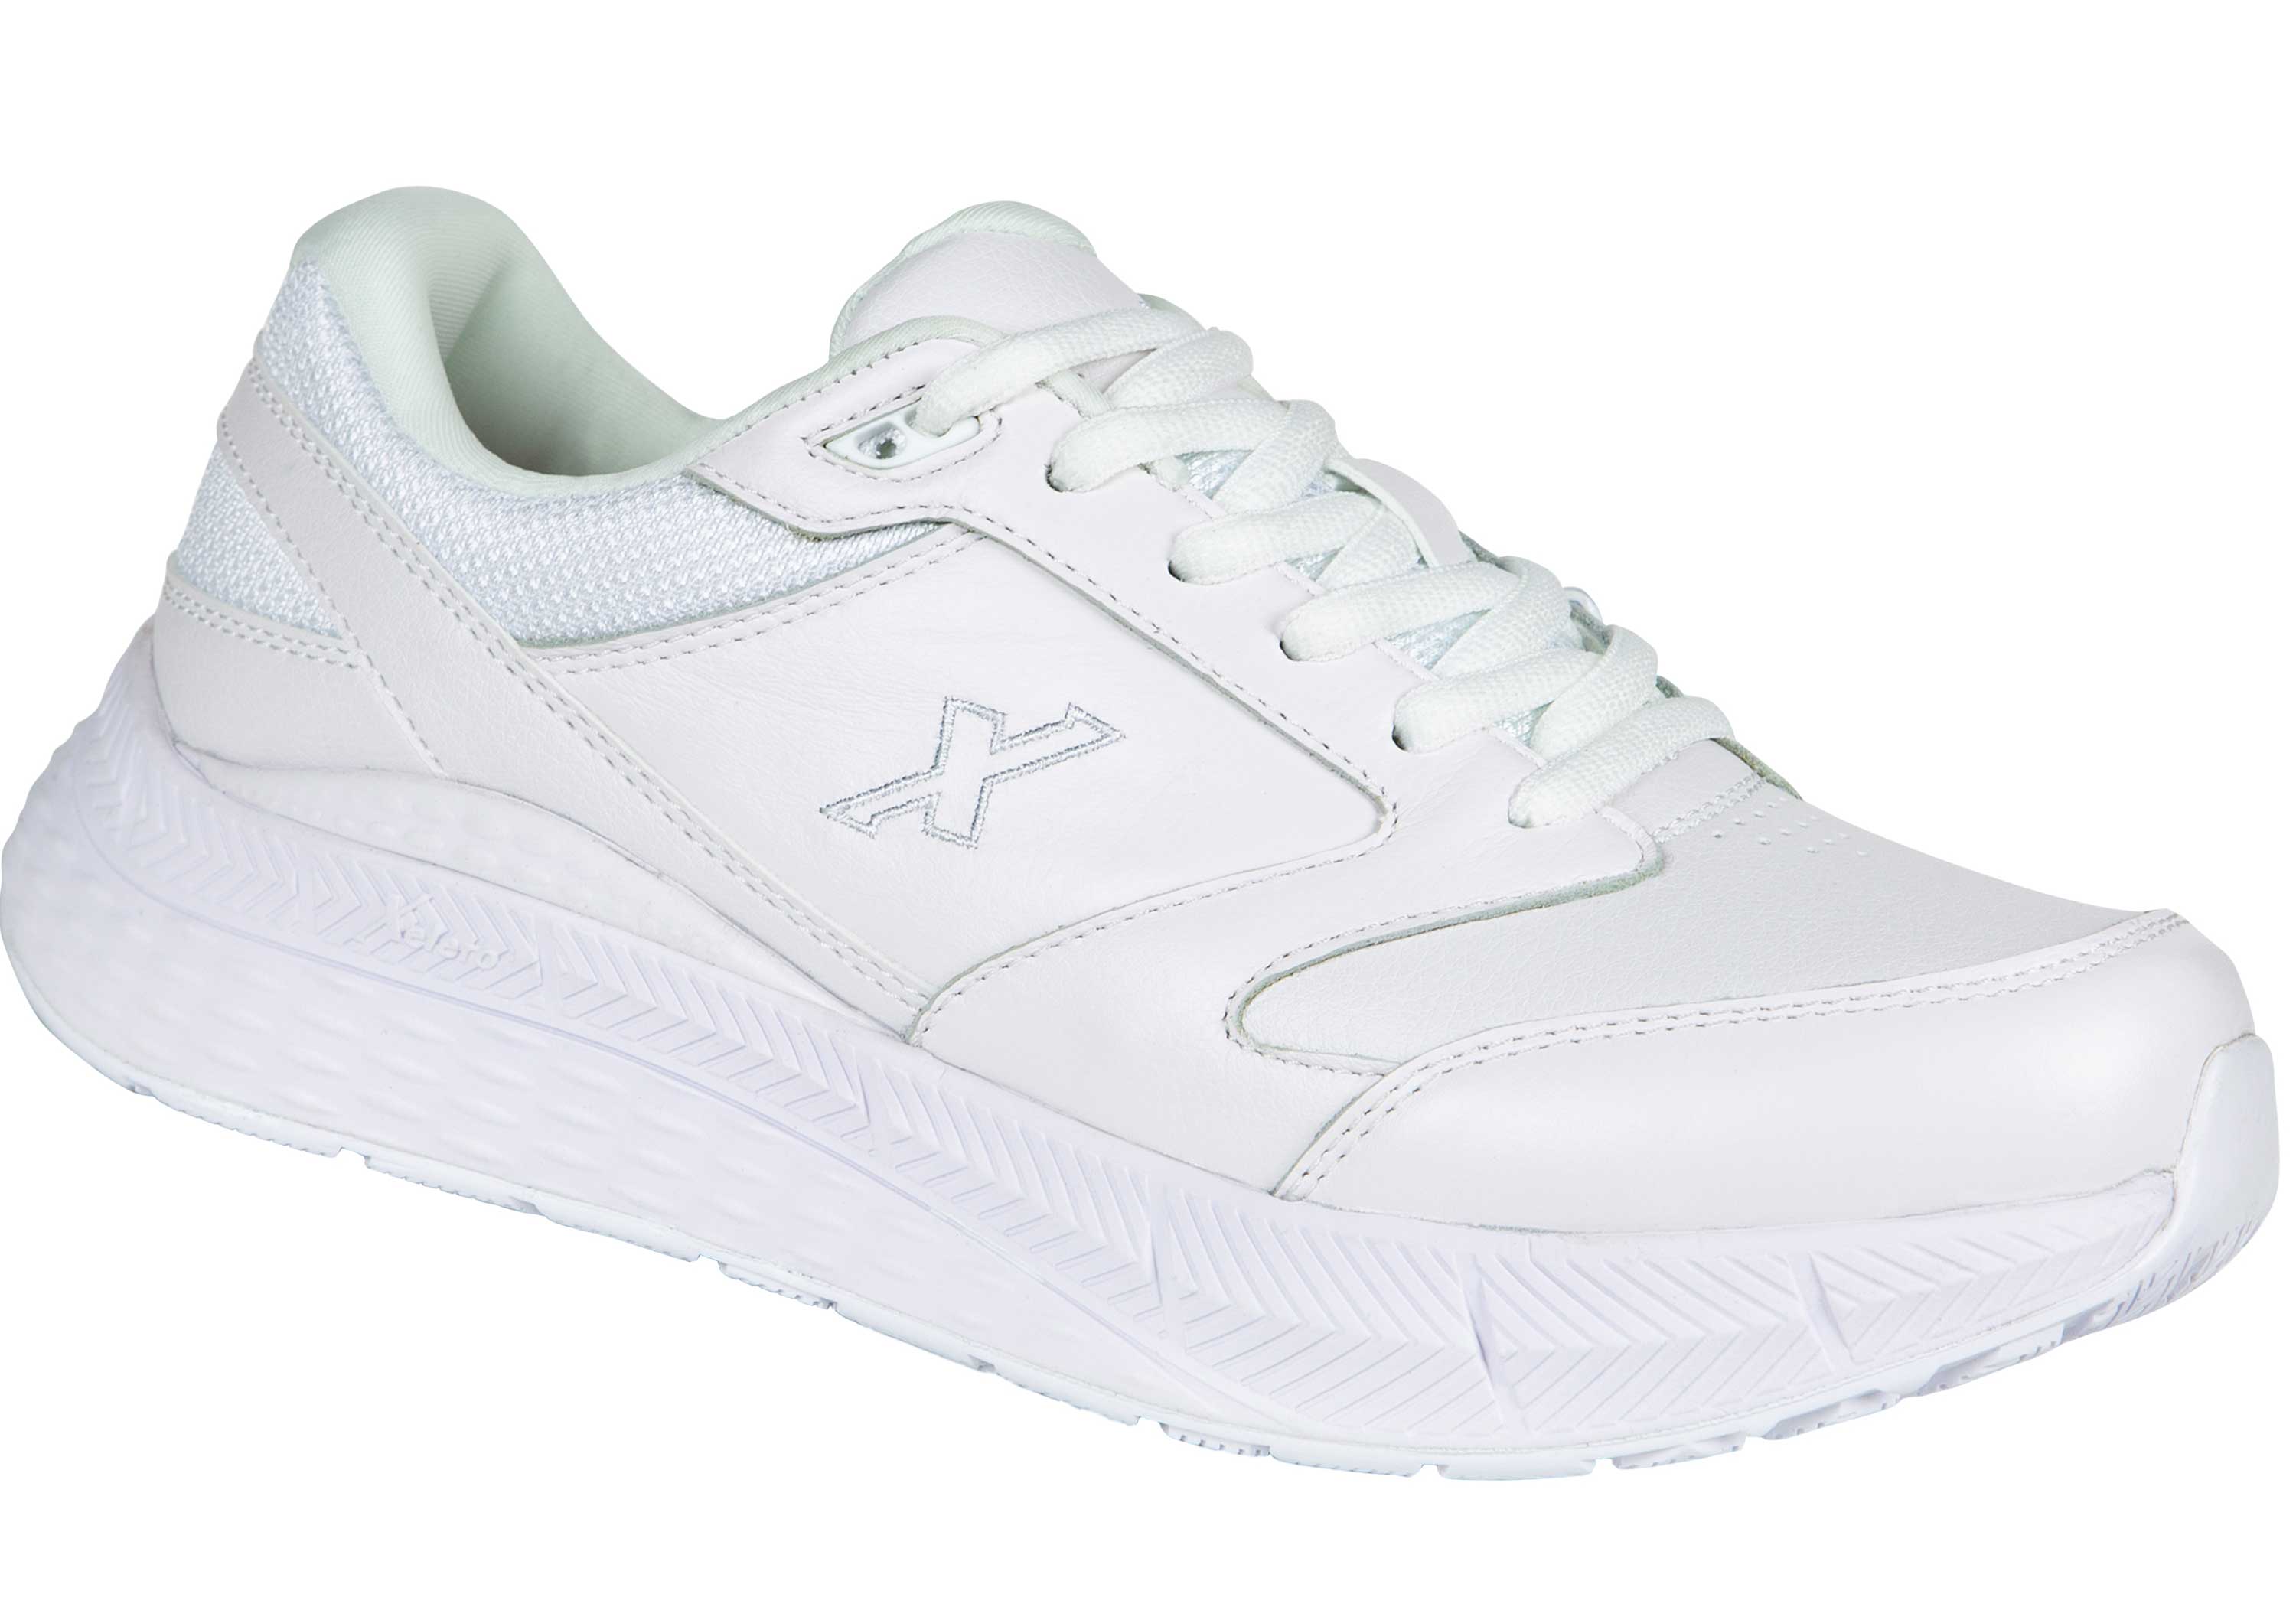 Xelero Shoes Steadfast X97401 Women's Athletic Shoe - Comfort  Orthopedic Diabetic Shoe - Extra Depth For Orthotics - Extra Wide